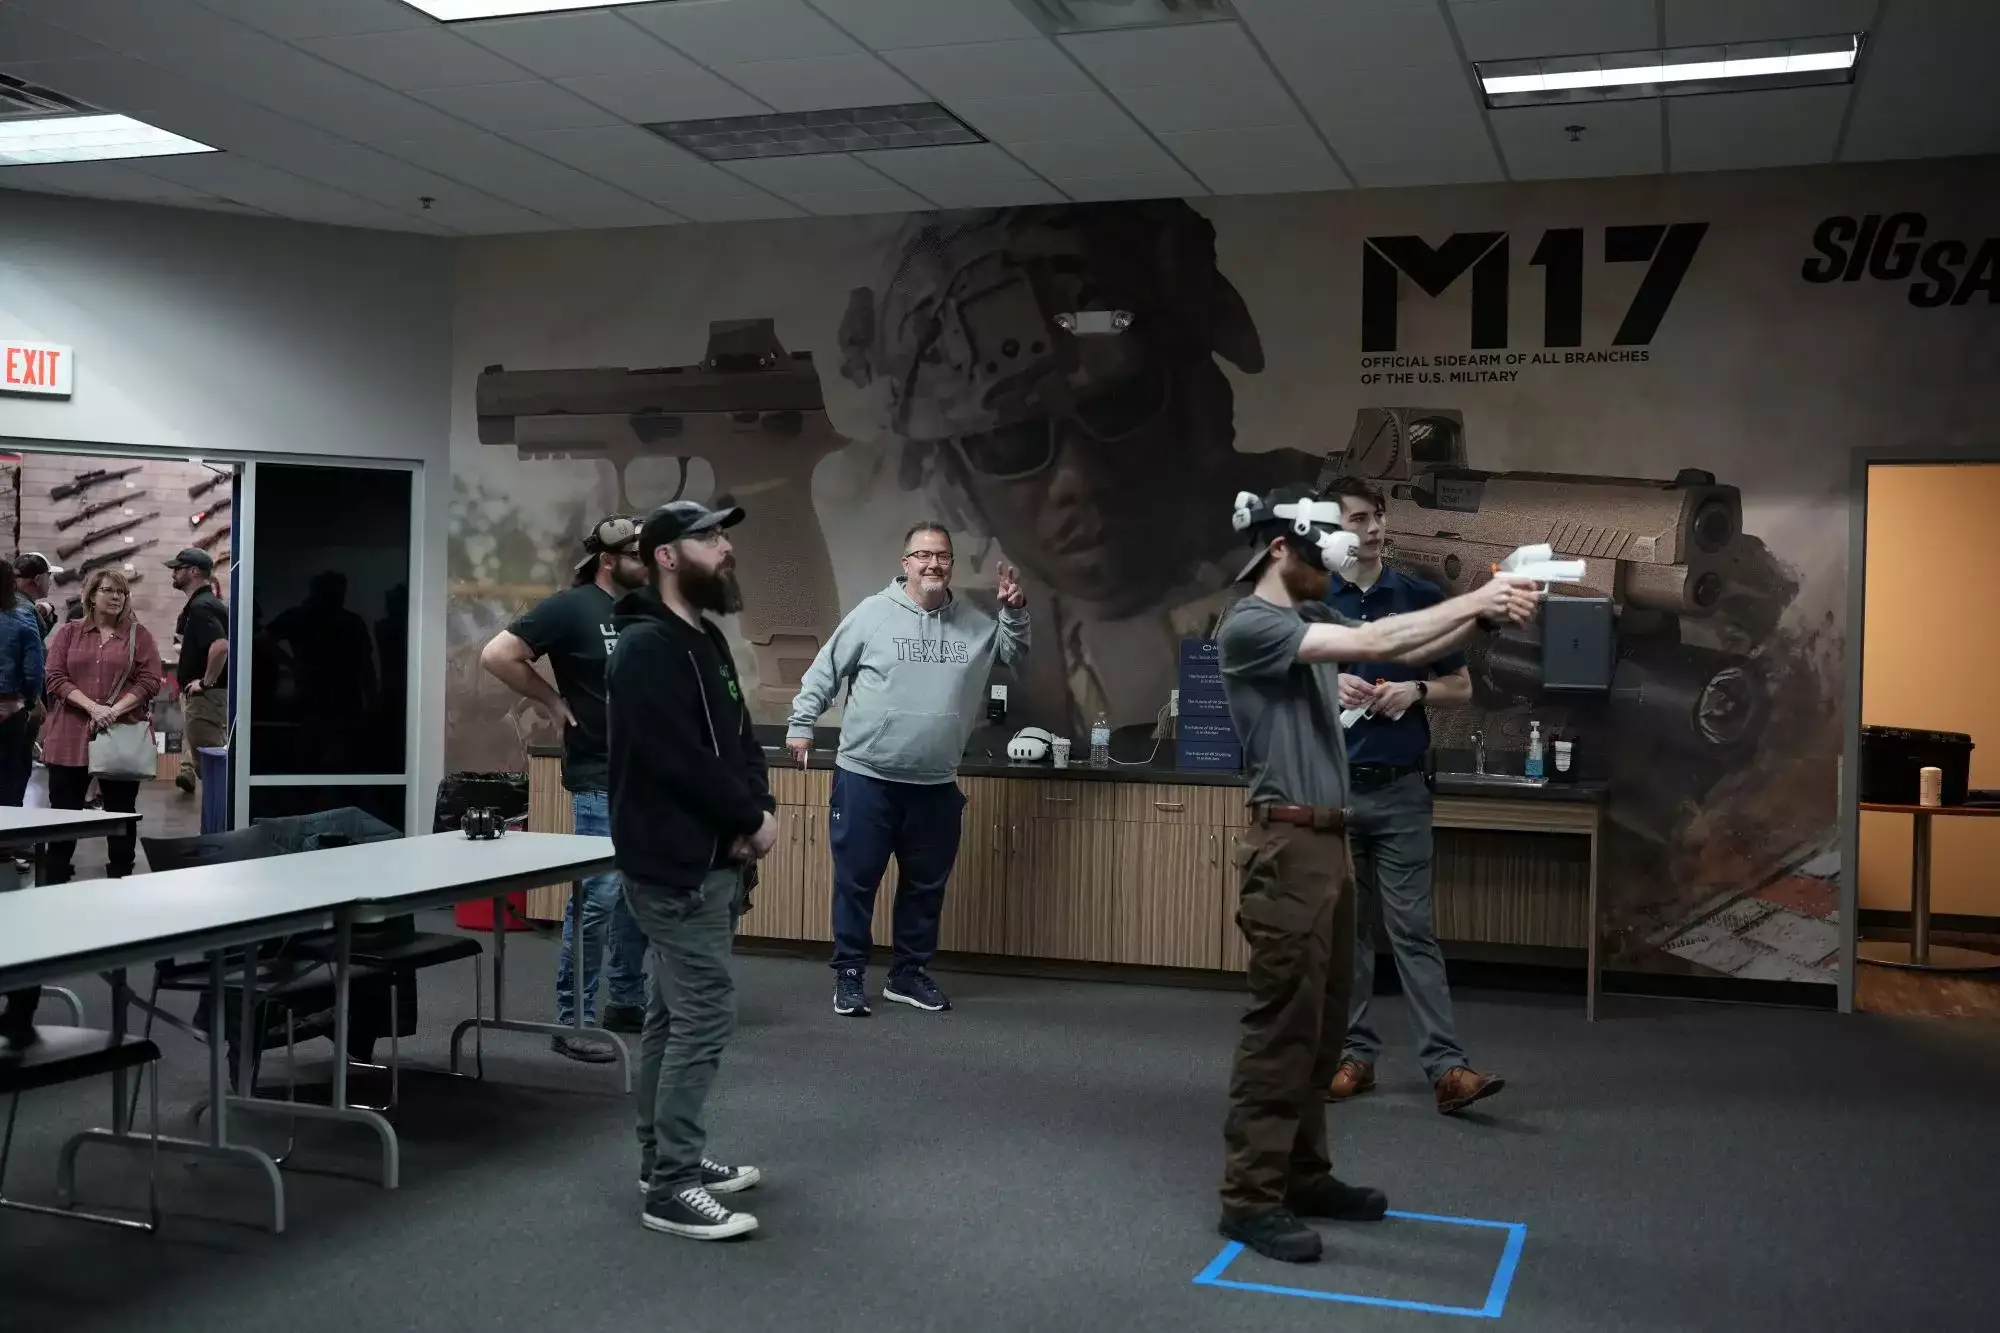 VR shooting demo